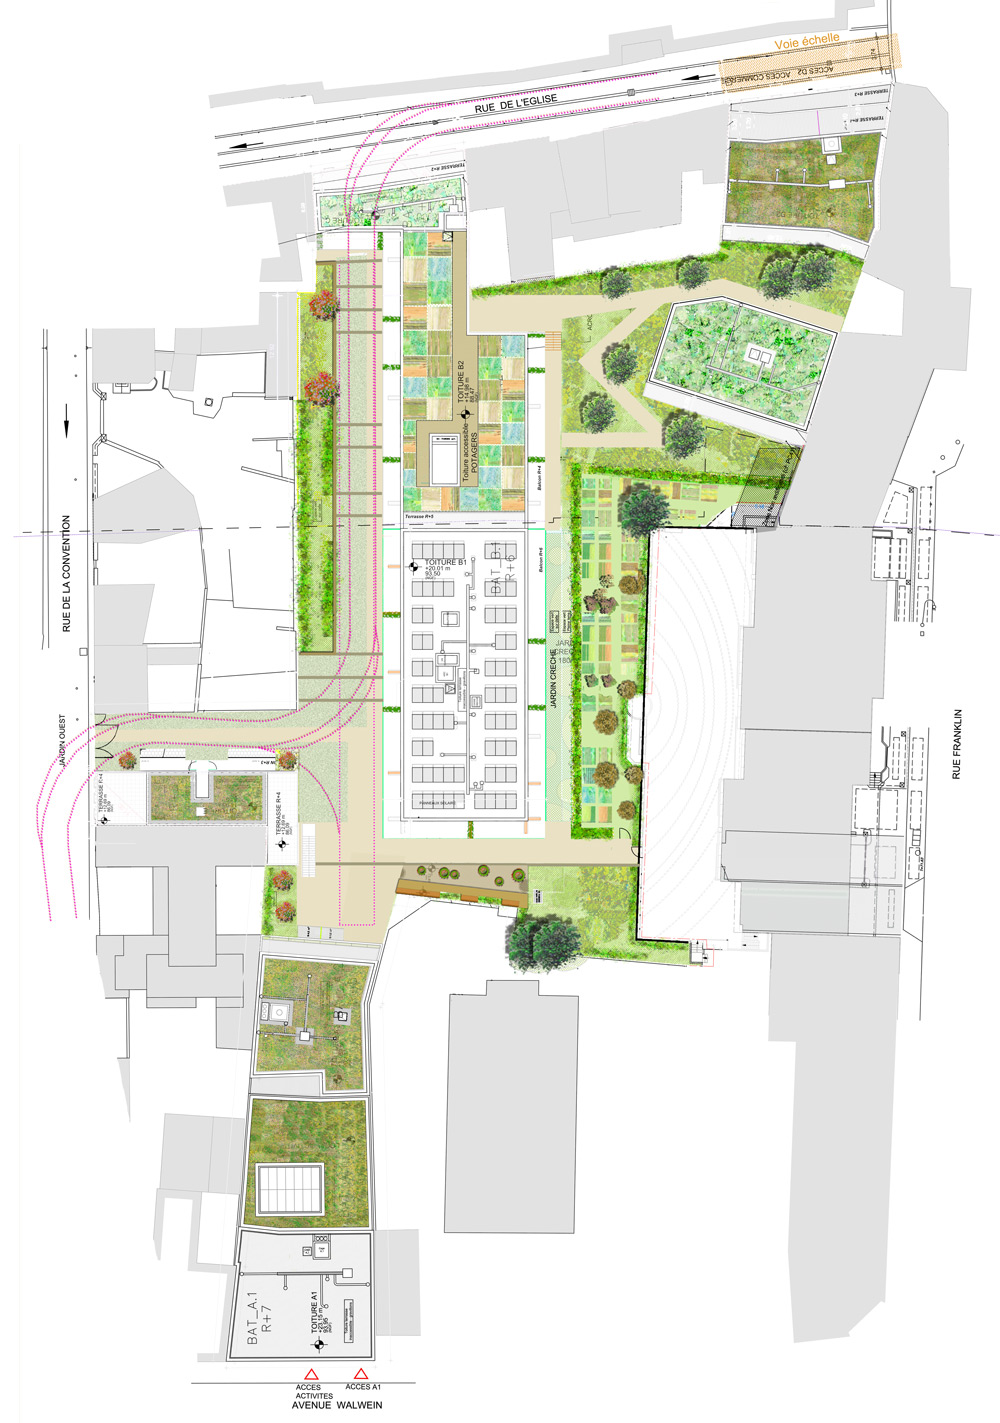 Plan des jardins villanova